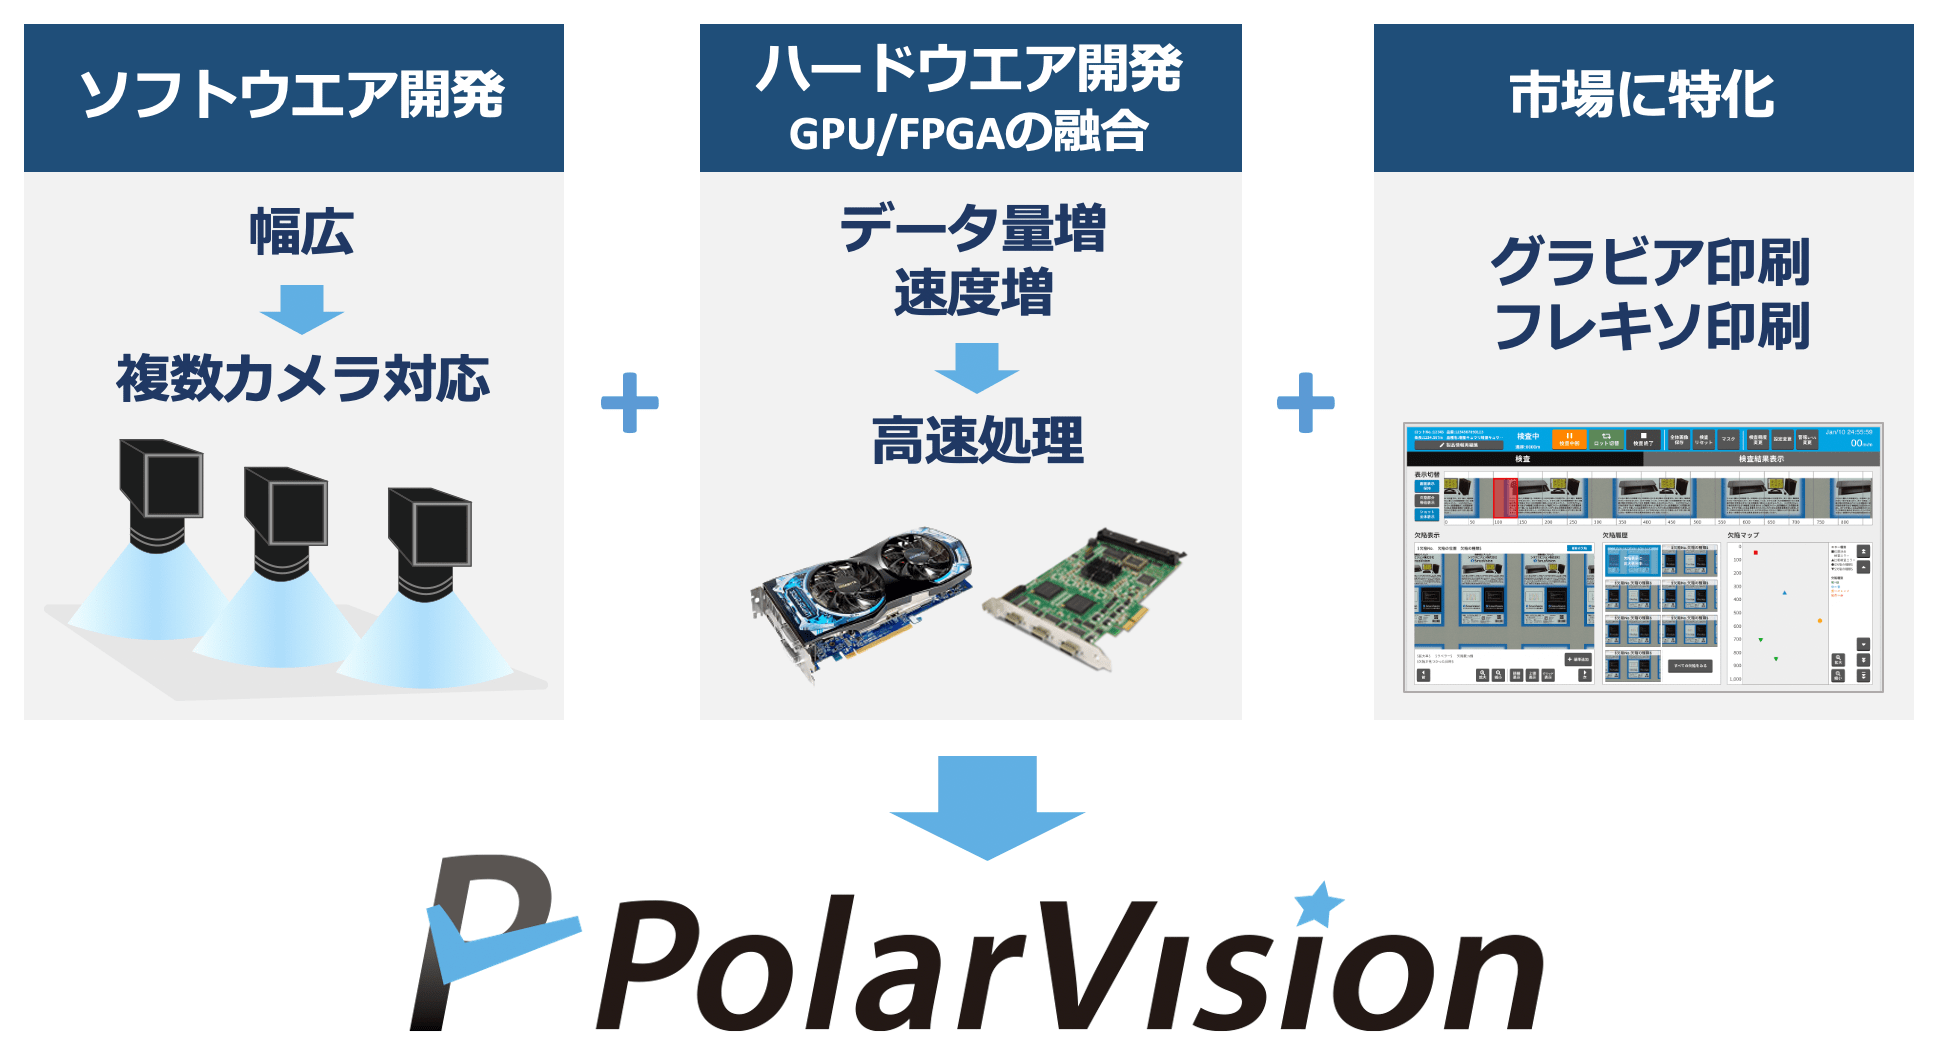 PolarVision：幅広→複数カメラ対応、データ量増・速度増→高速処理、グラビア印刷・フレキソ印刷